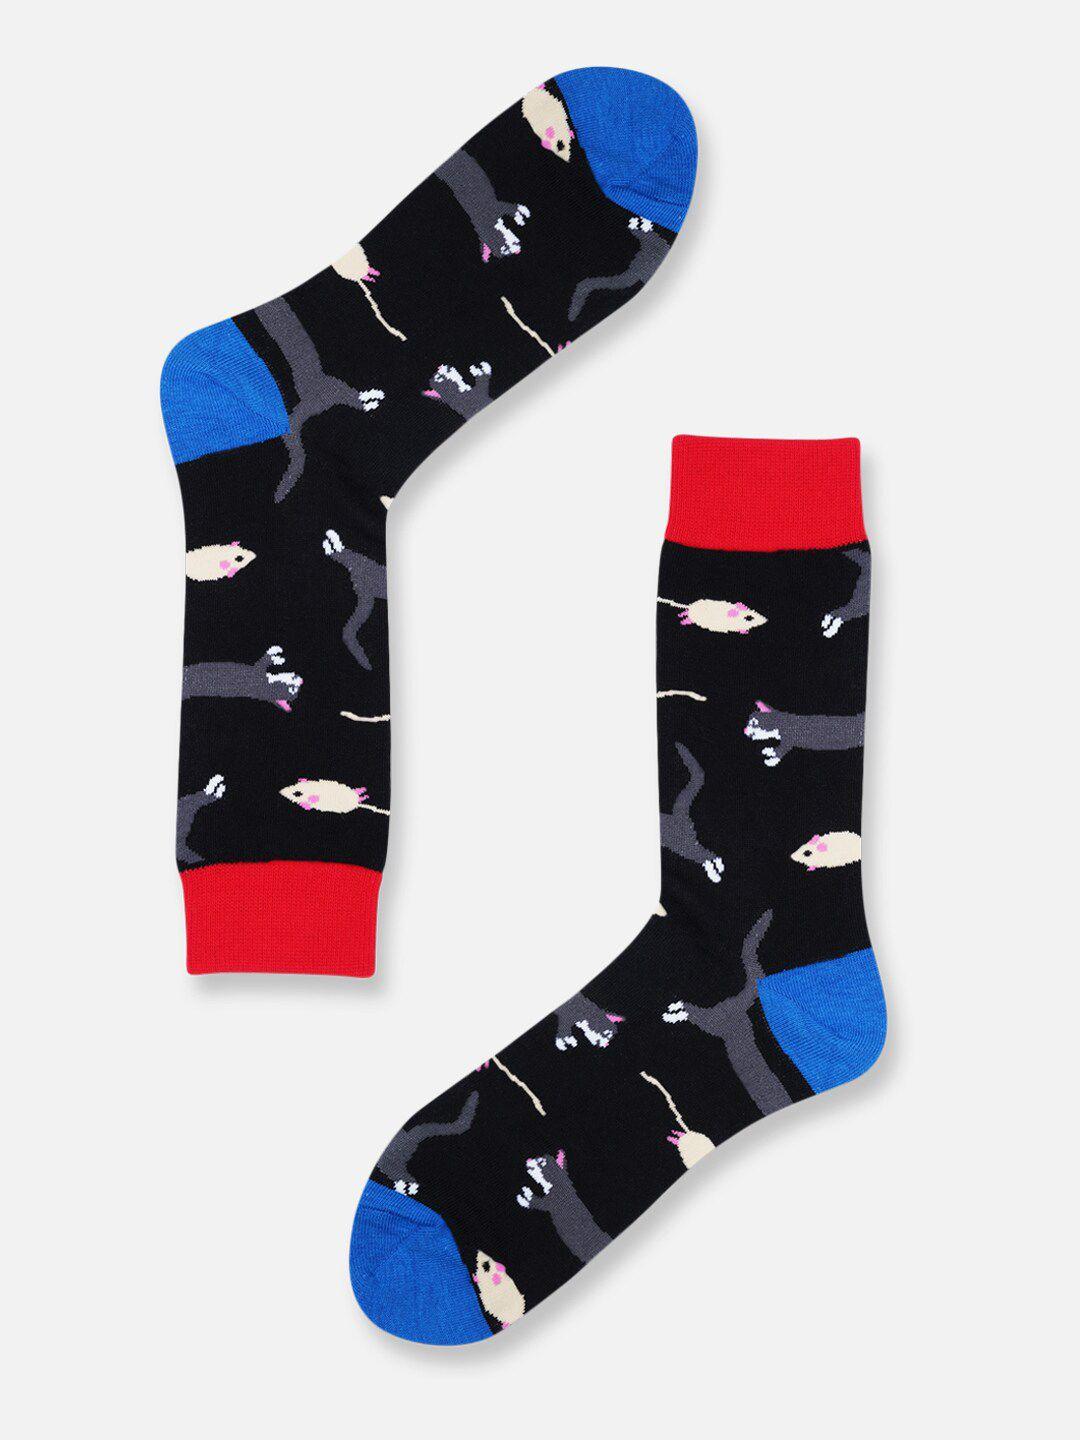 toffcraft men patterned cotton calf-length socks